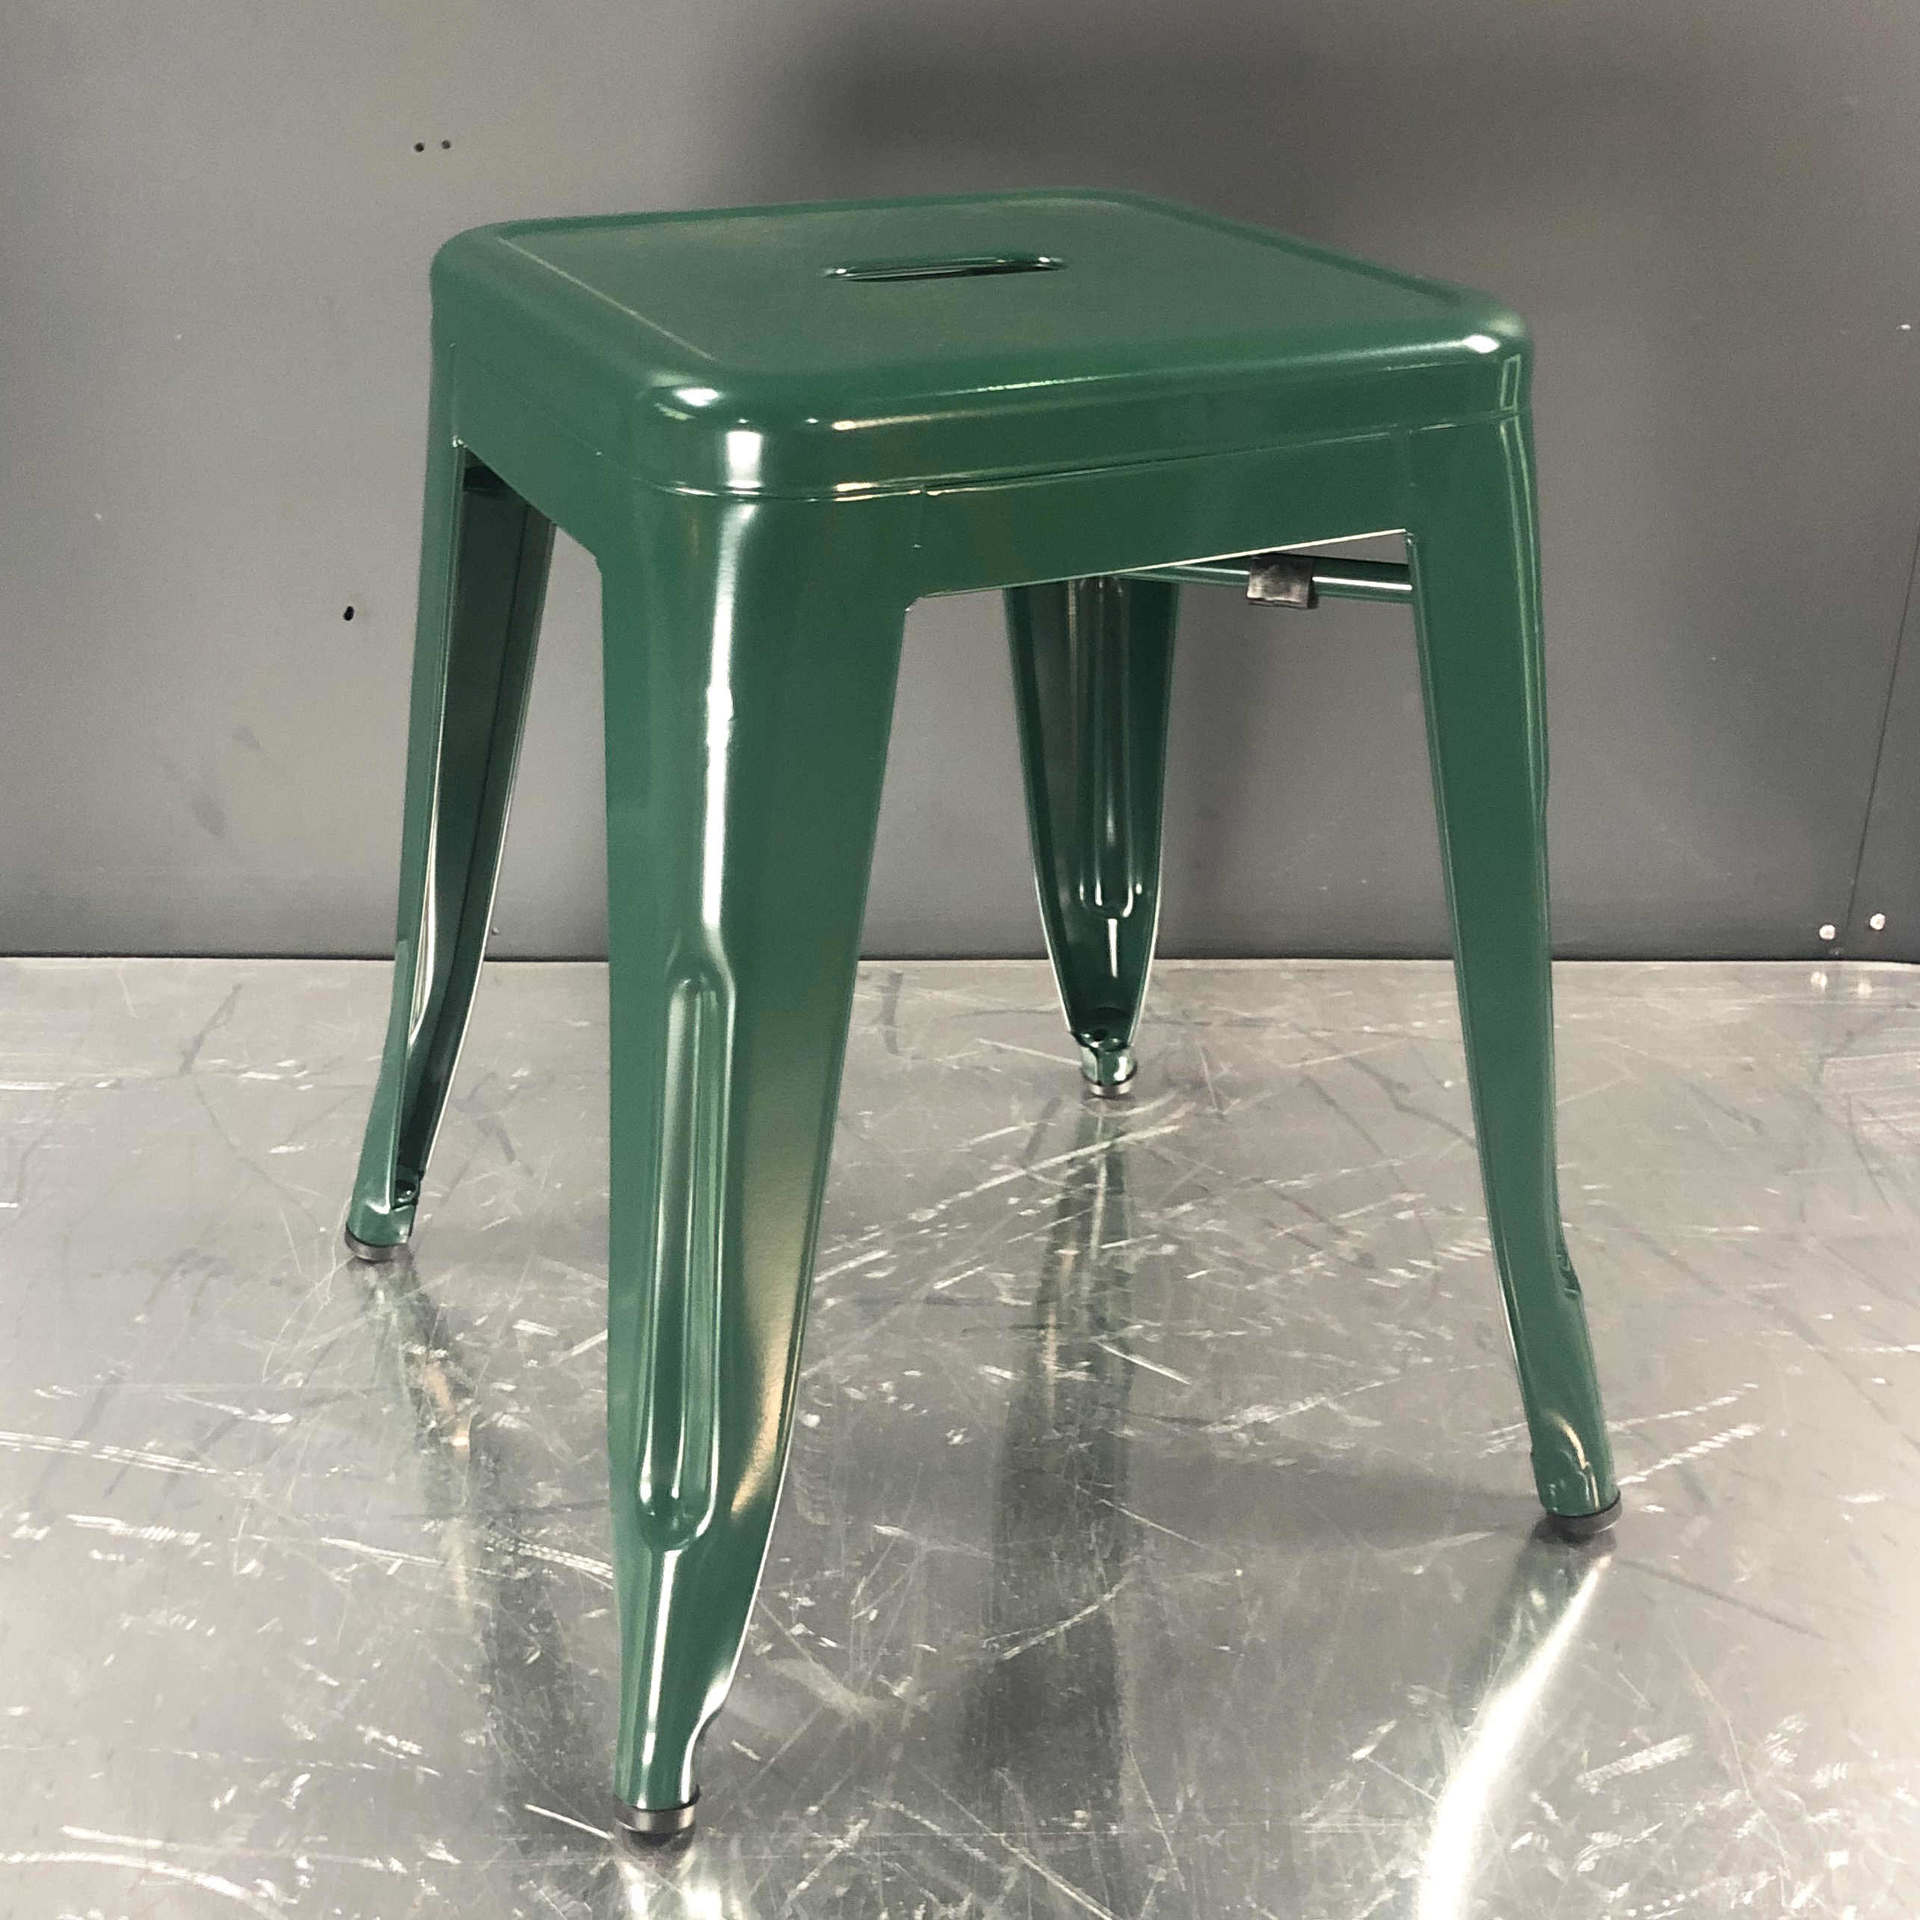 Hot sale industrial metal dining stool